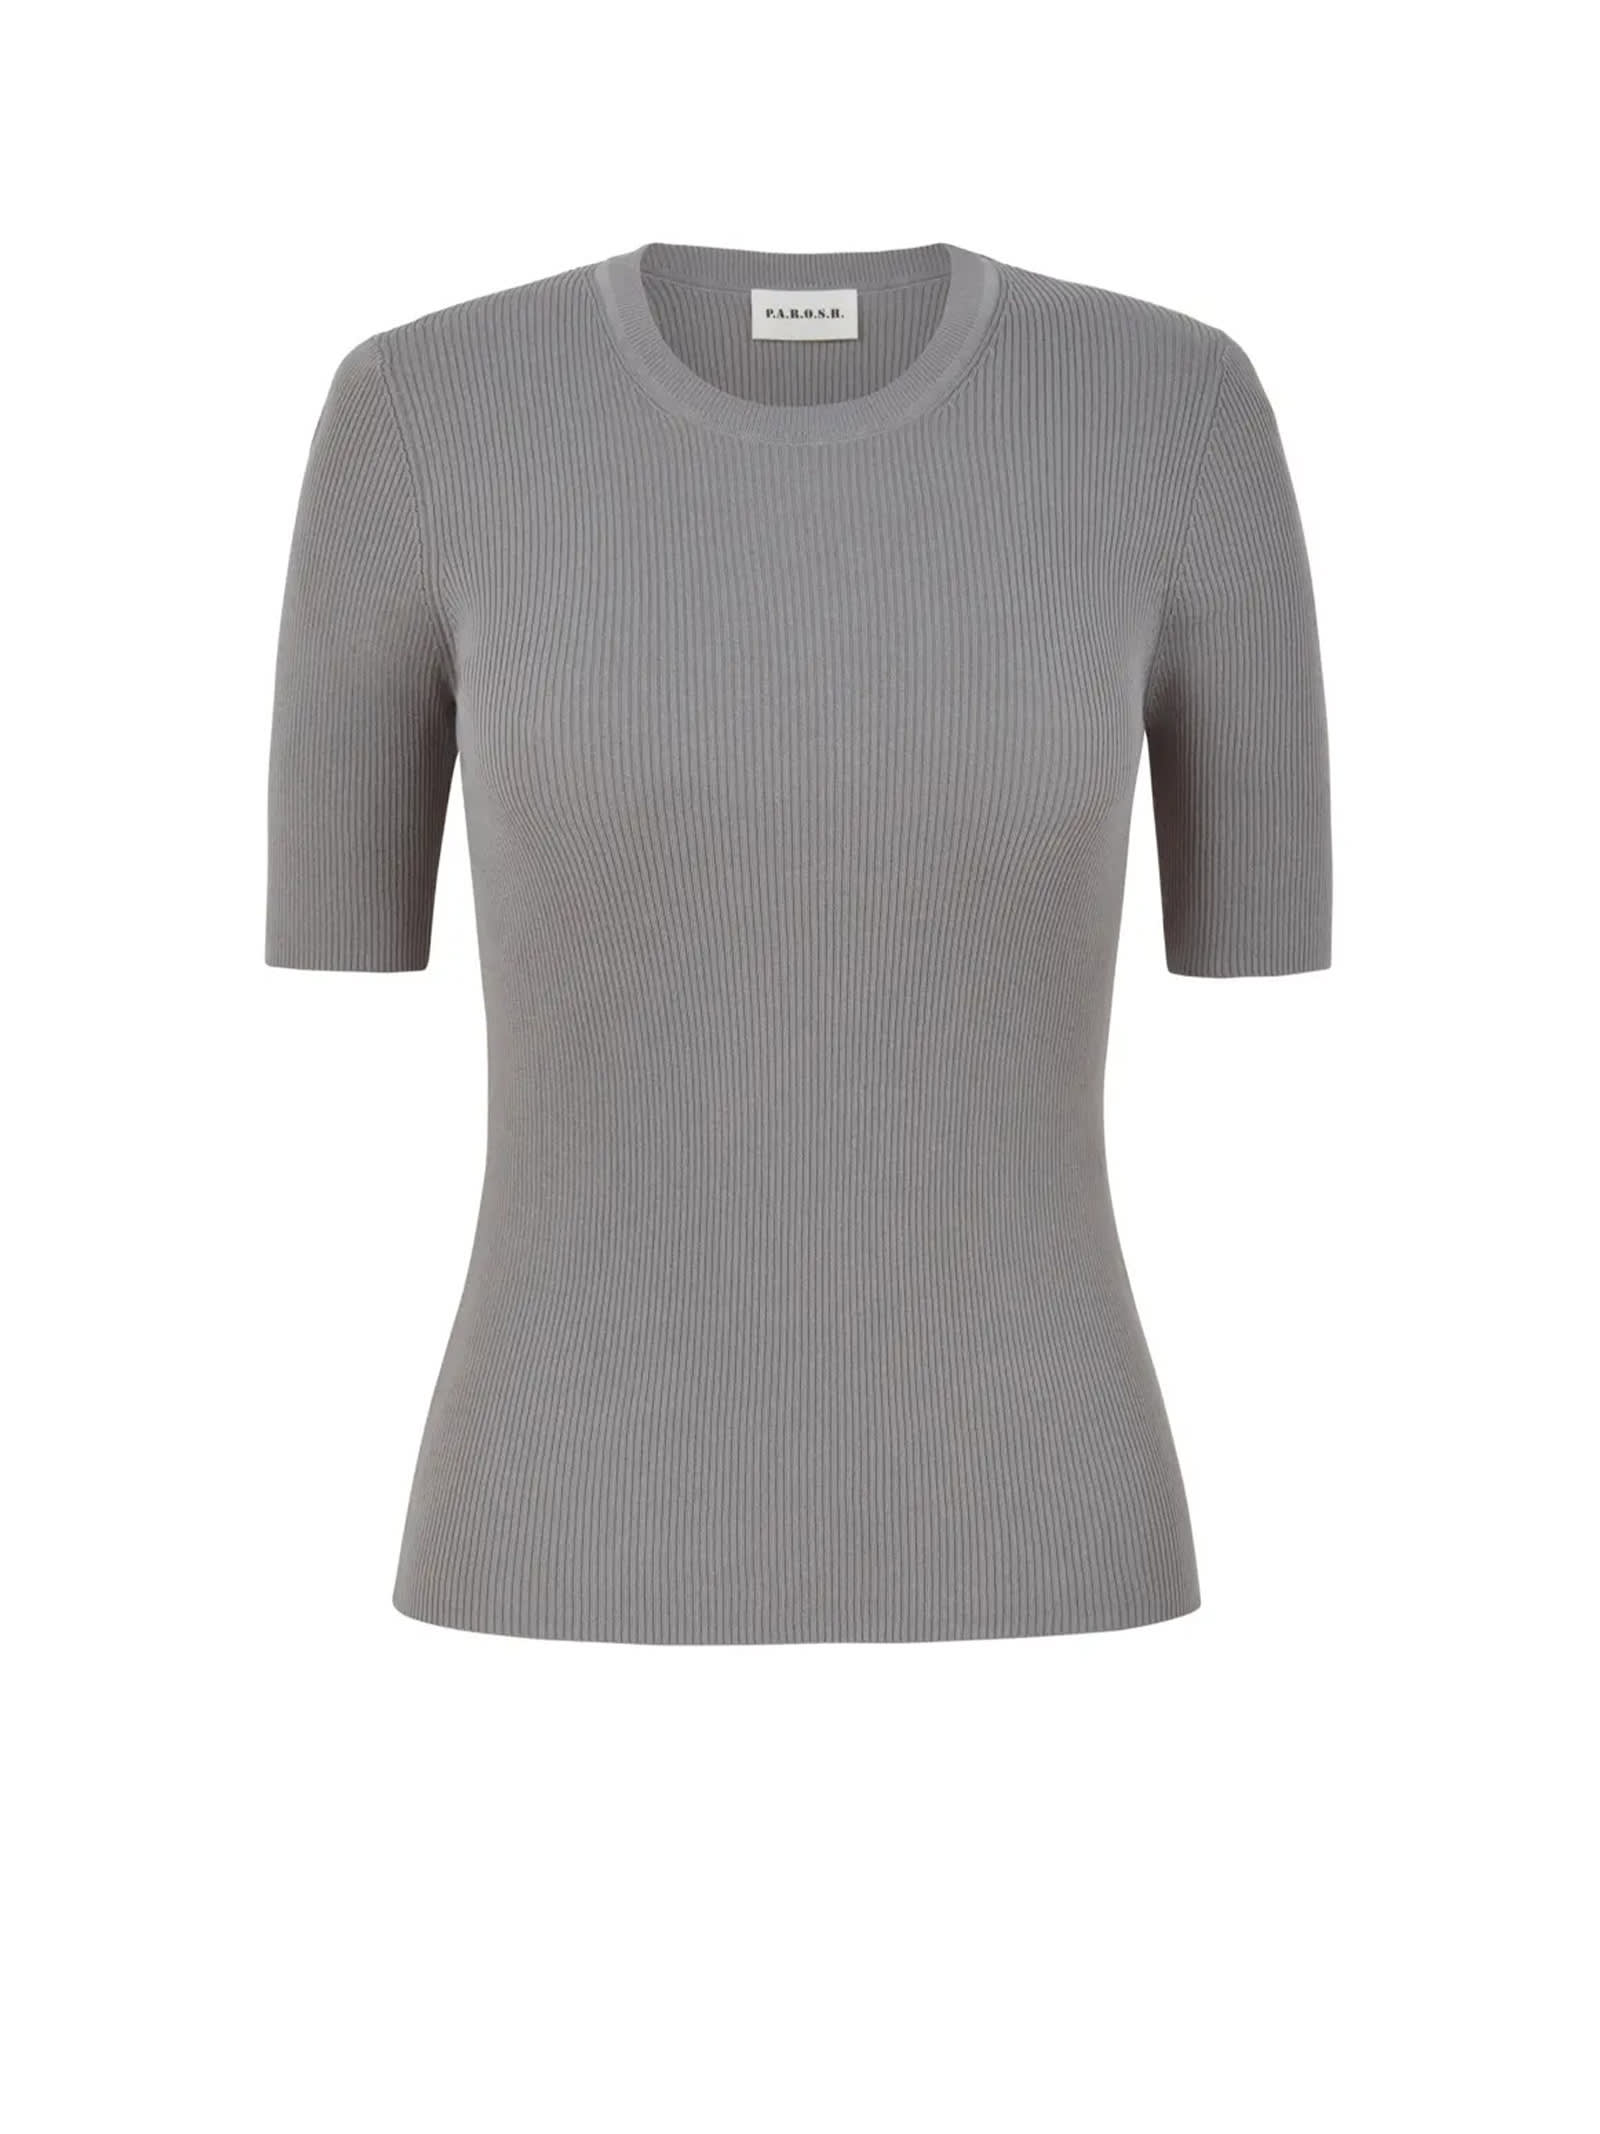 Parosh Gray Short-sleeved Shirt